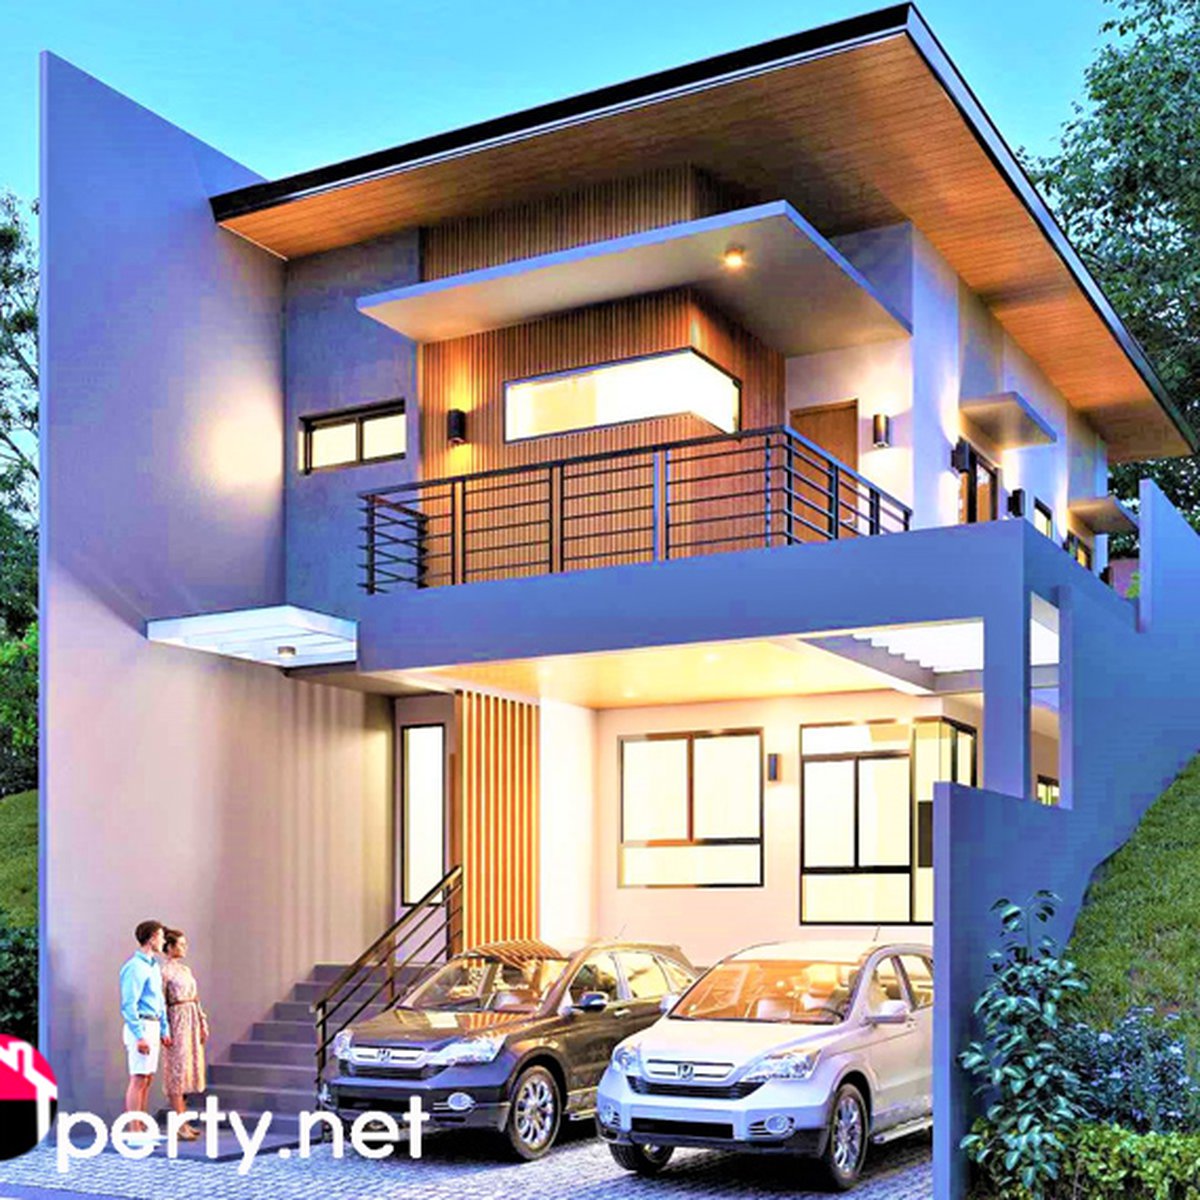 3-bedroom Single Attached House For Sale in Cebu City Cebu